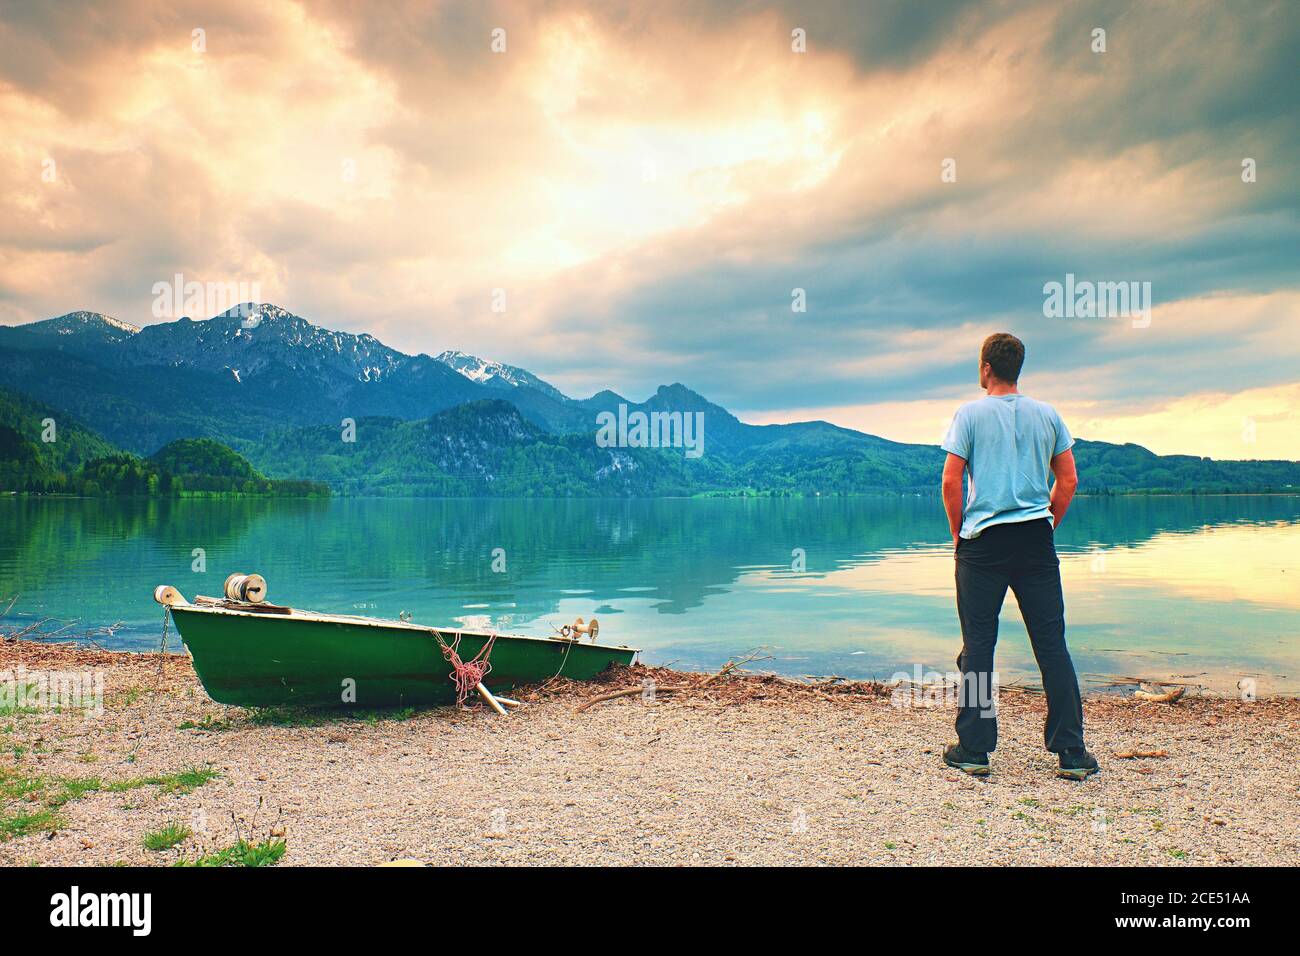 Adult man in blue shirt walk at old fishing paddle boat at mountains lake coast. Stock Photo